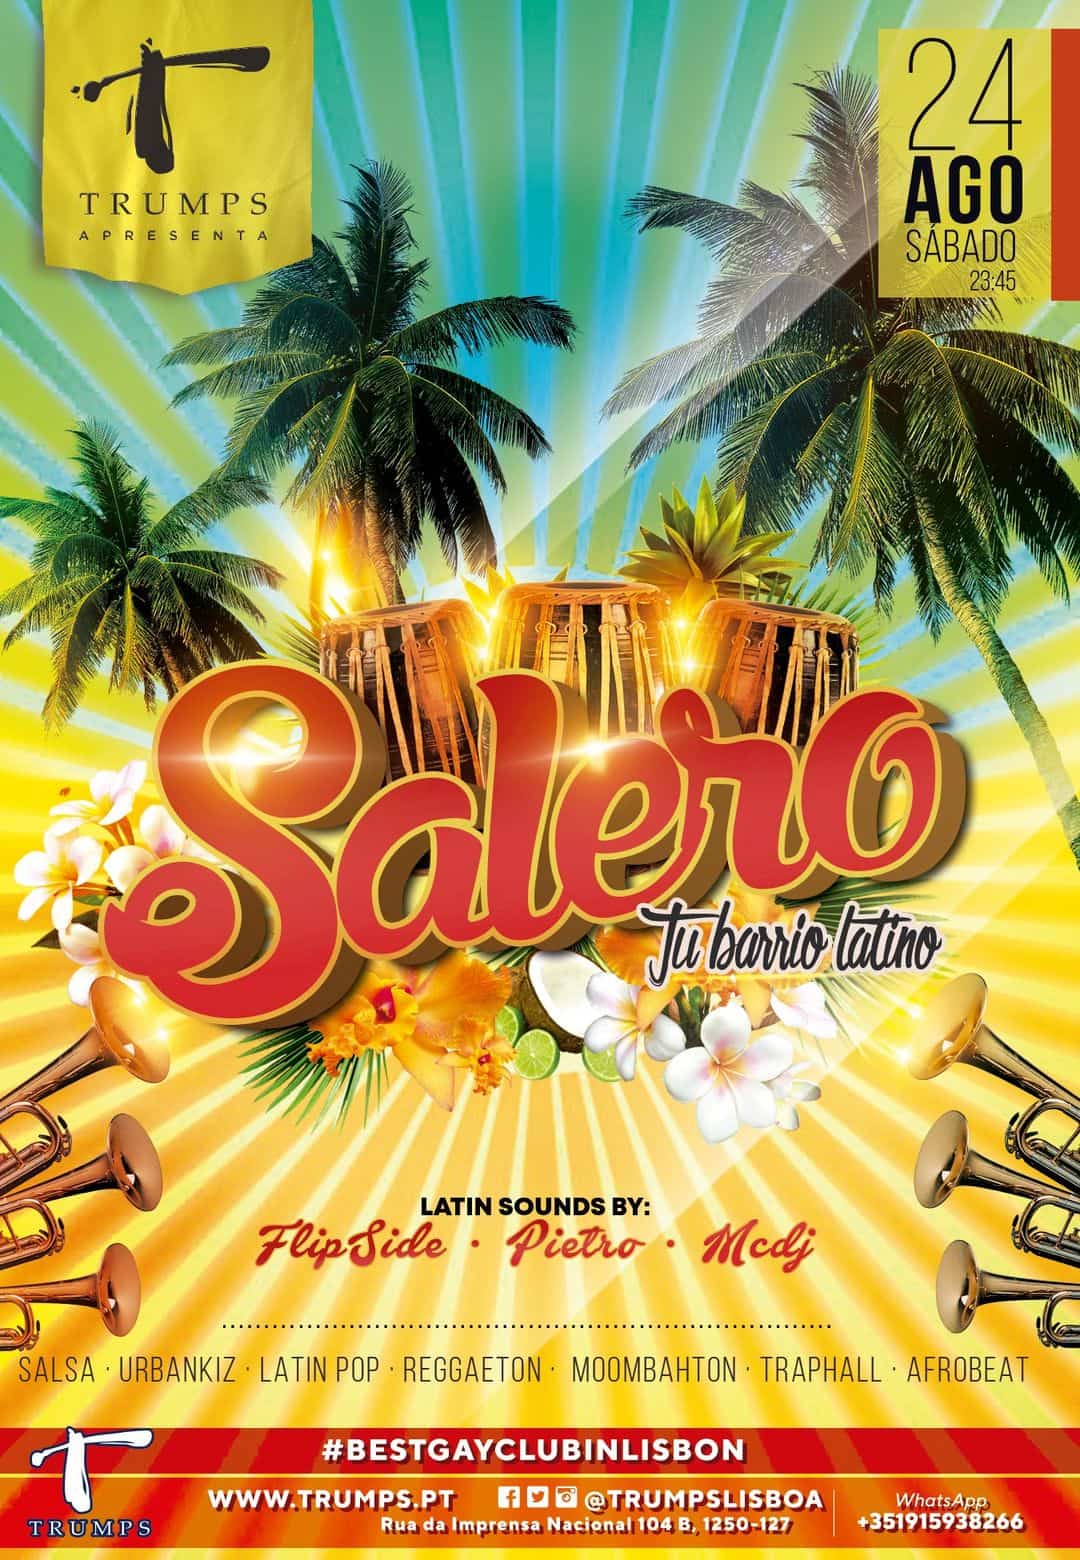 Salero + Tu Barrio Latino (1)